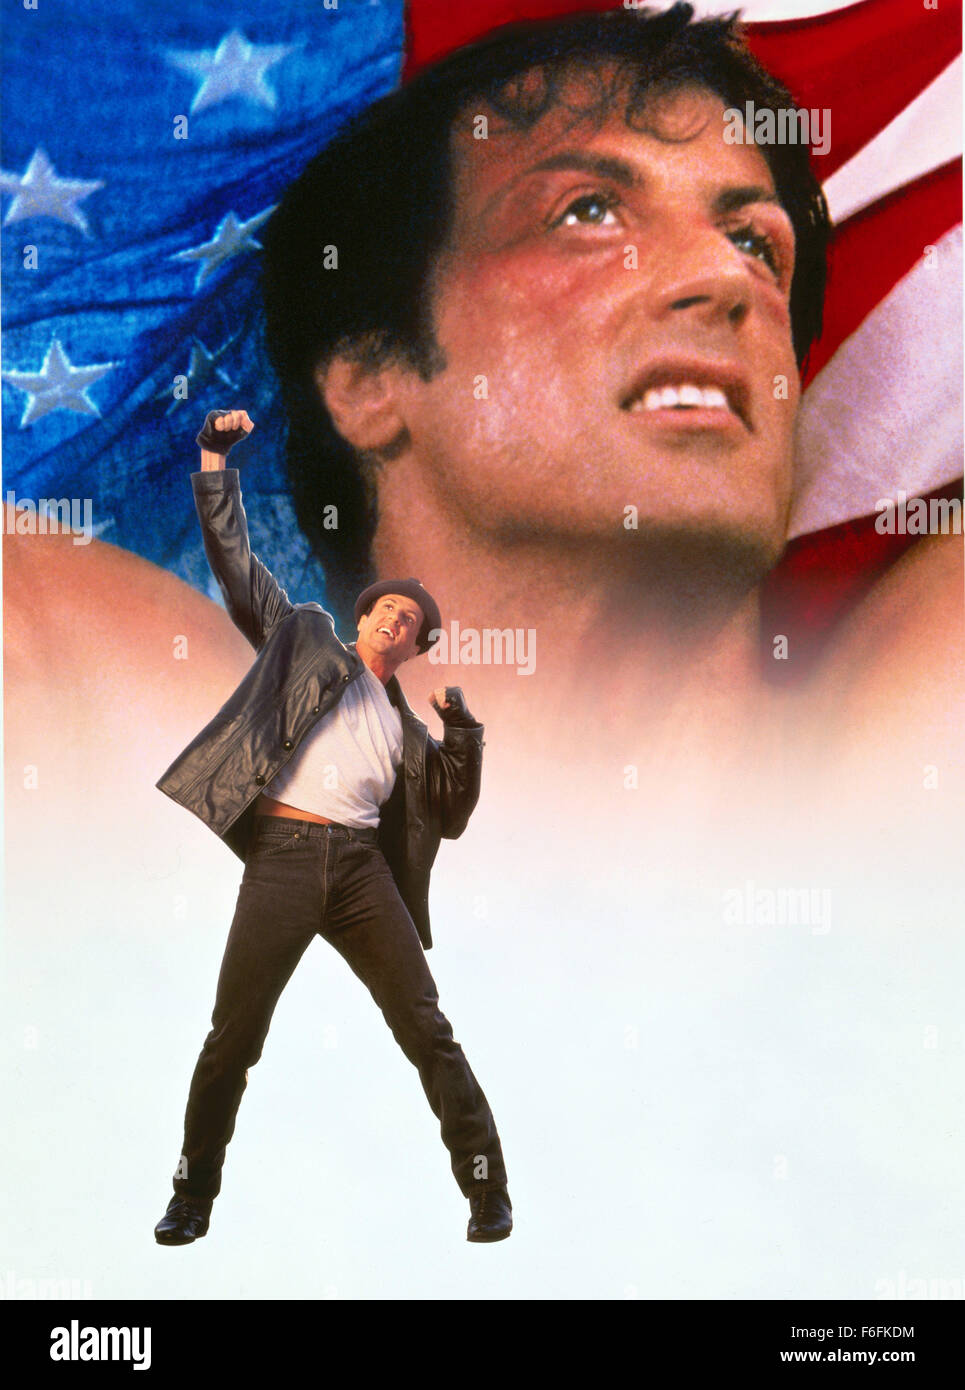 Rocky Balboa Poster